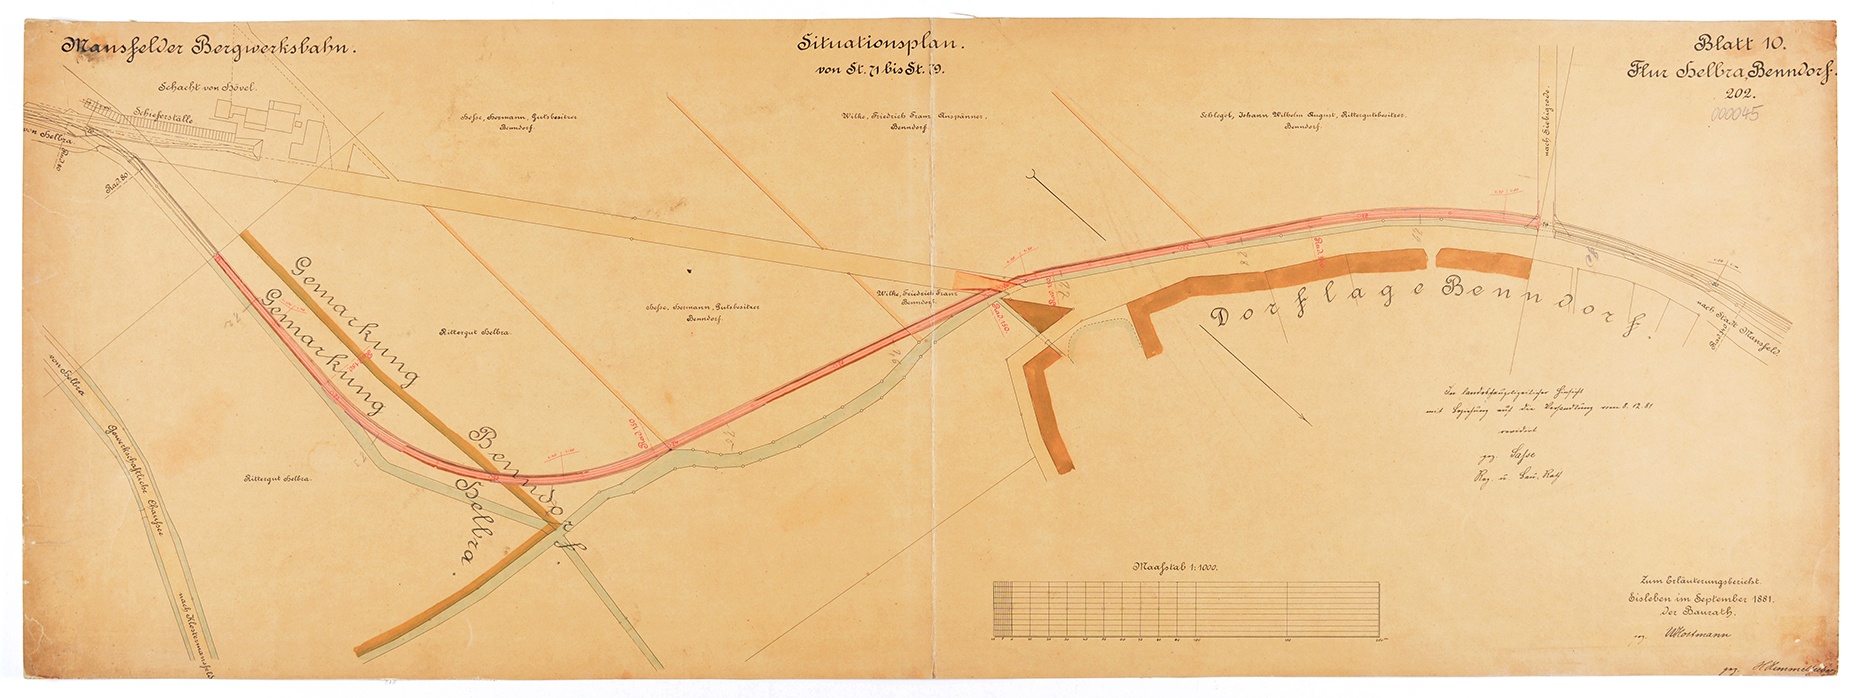 Mansfelder Bergwerksbahn. Situationsplan von St. 71 bis St. 79. (Mansfeld-Museum im Humboldt-Schloss CC BY-NC-SA)